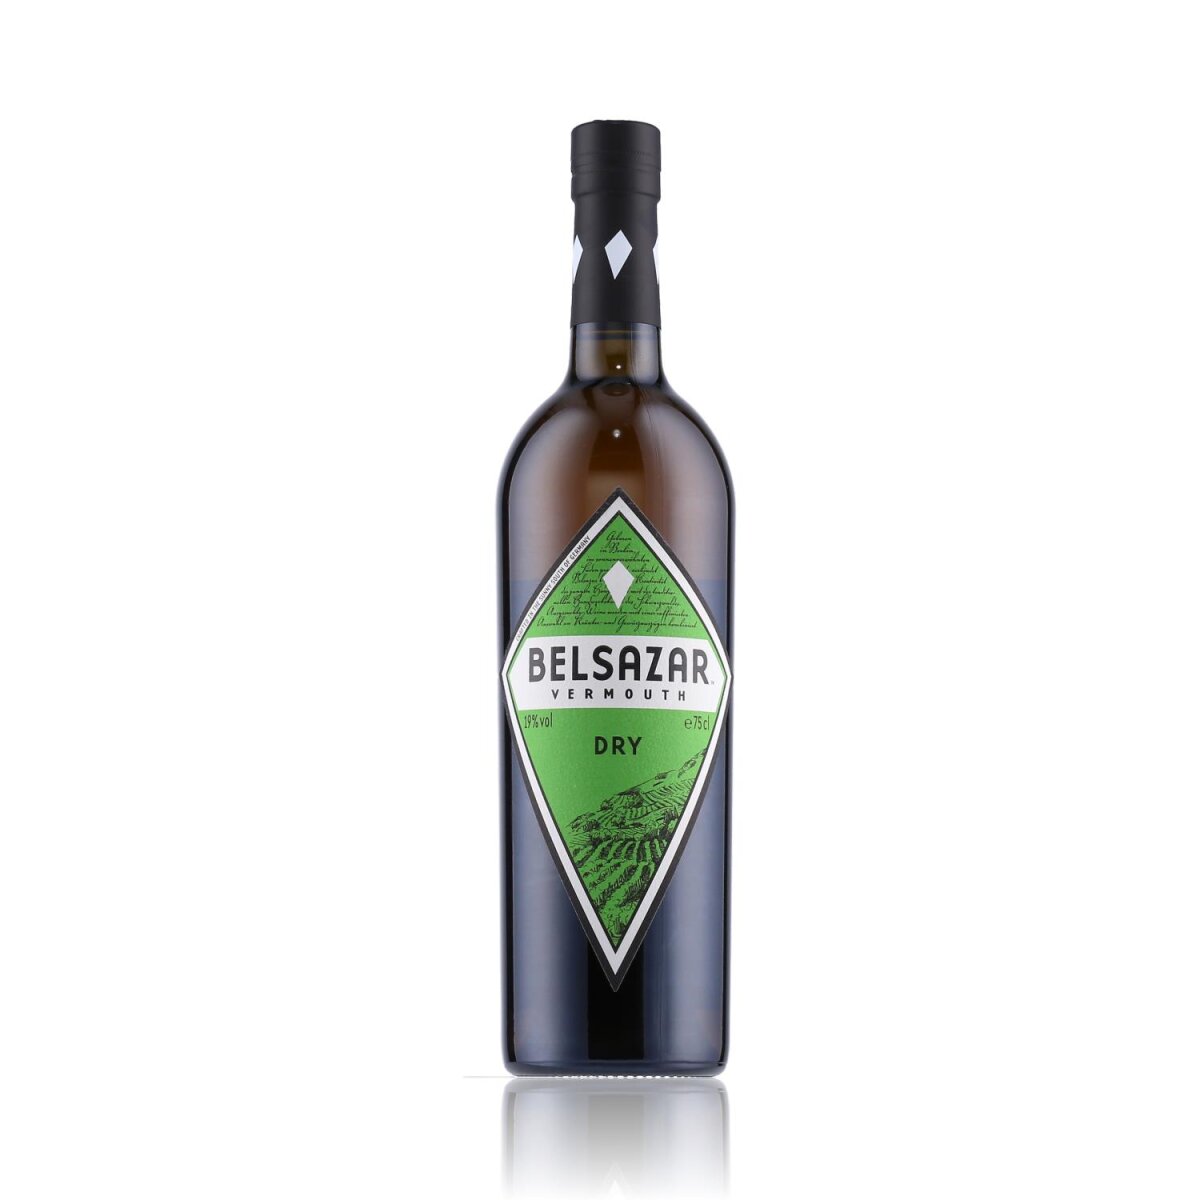 Belsazar Dry Vermouth € 0,75l, 19% 16,89 Vol